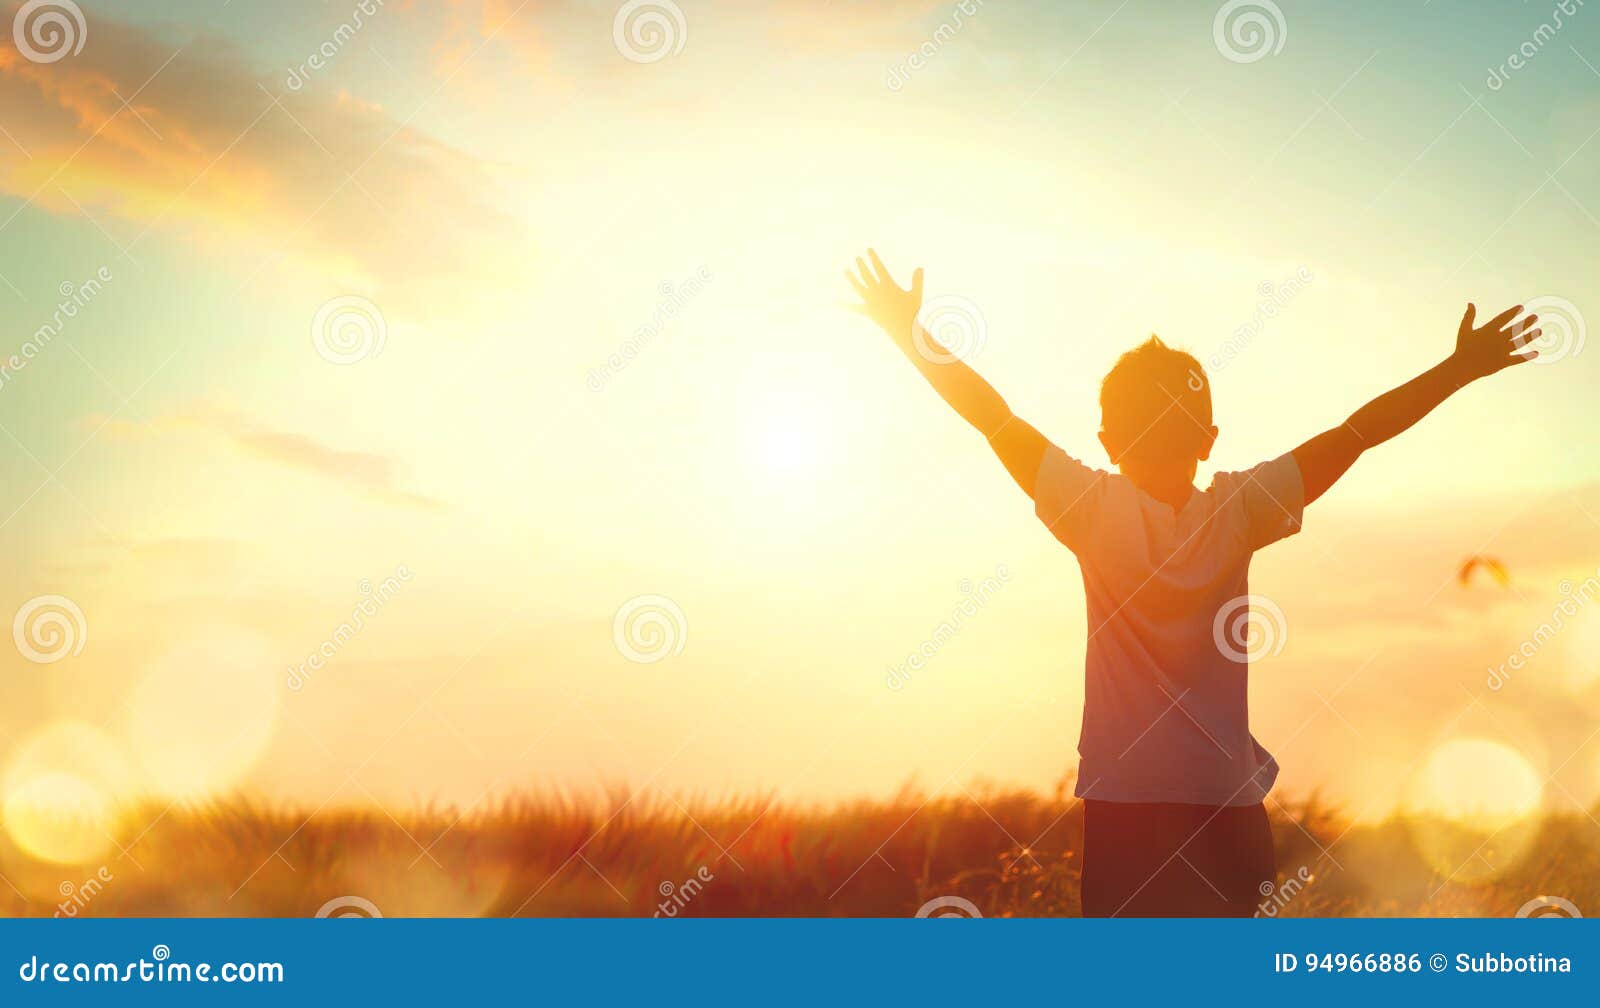 little boy raising hands over sunset sky